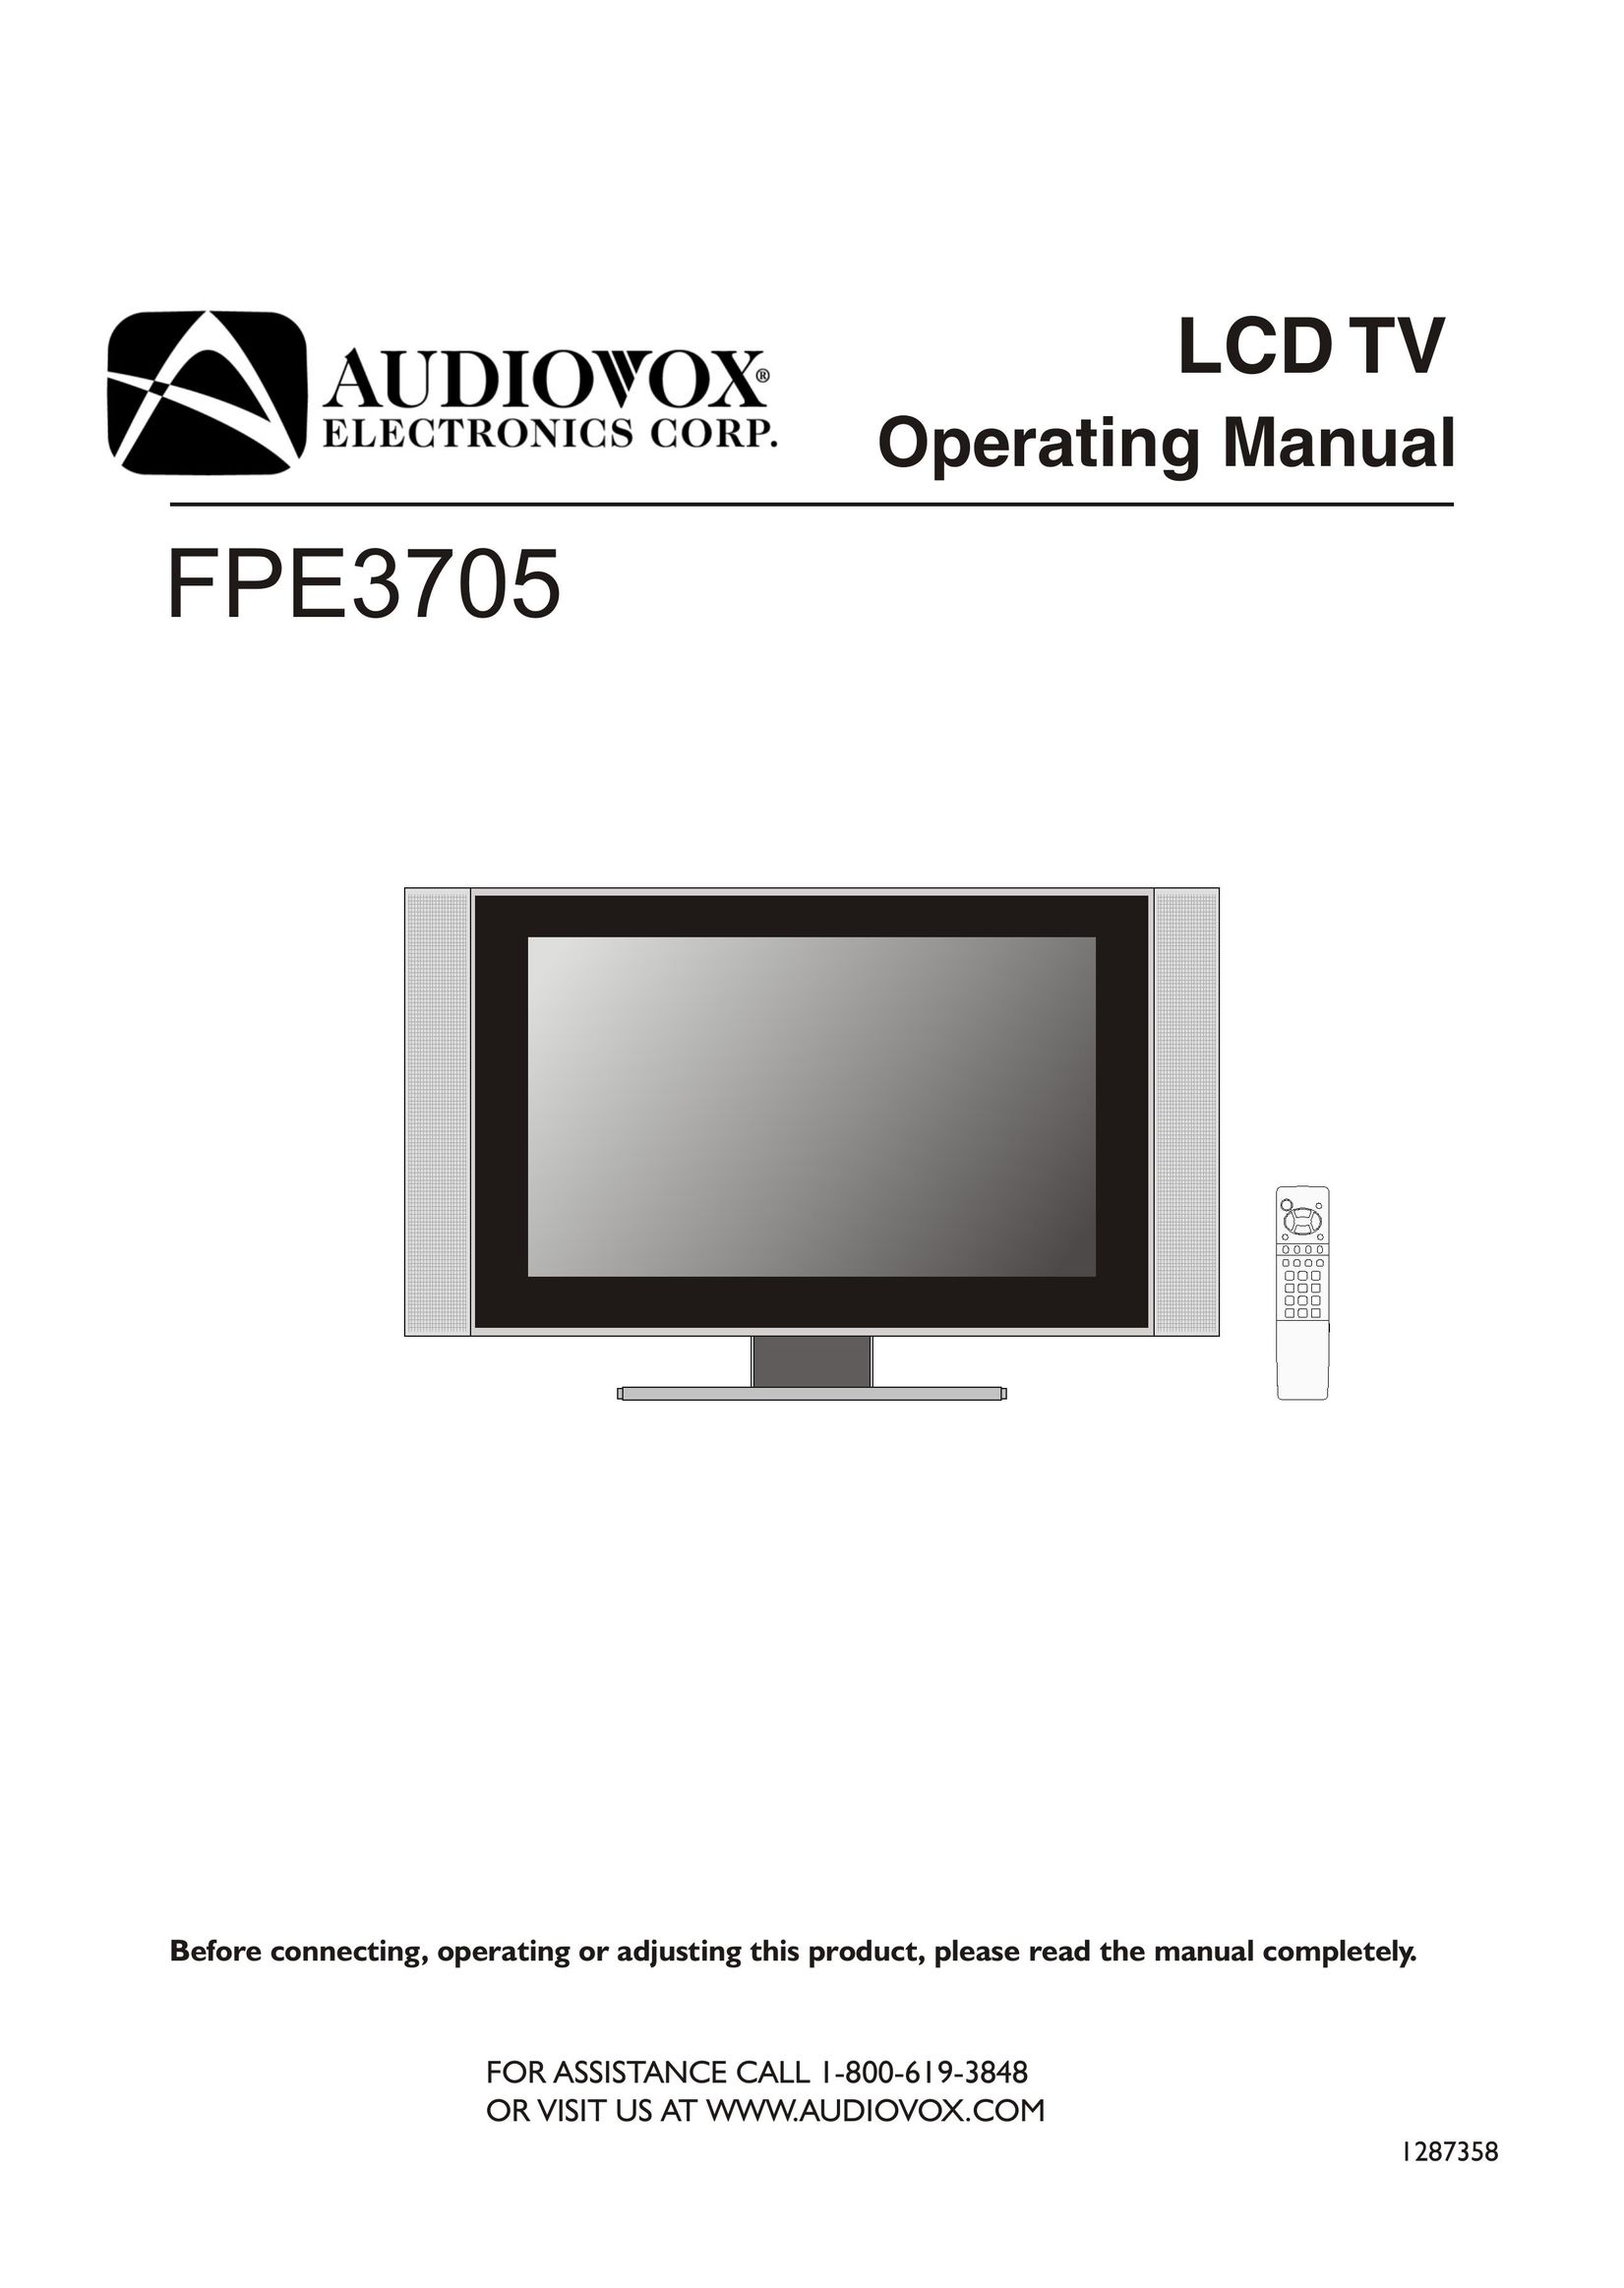 Audiovox FPE3705 Flat Panel Television User Manual